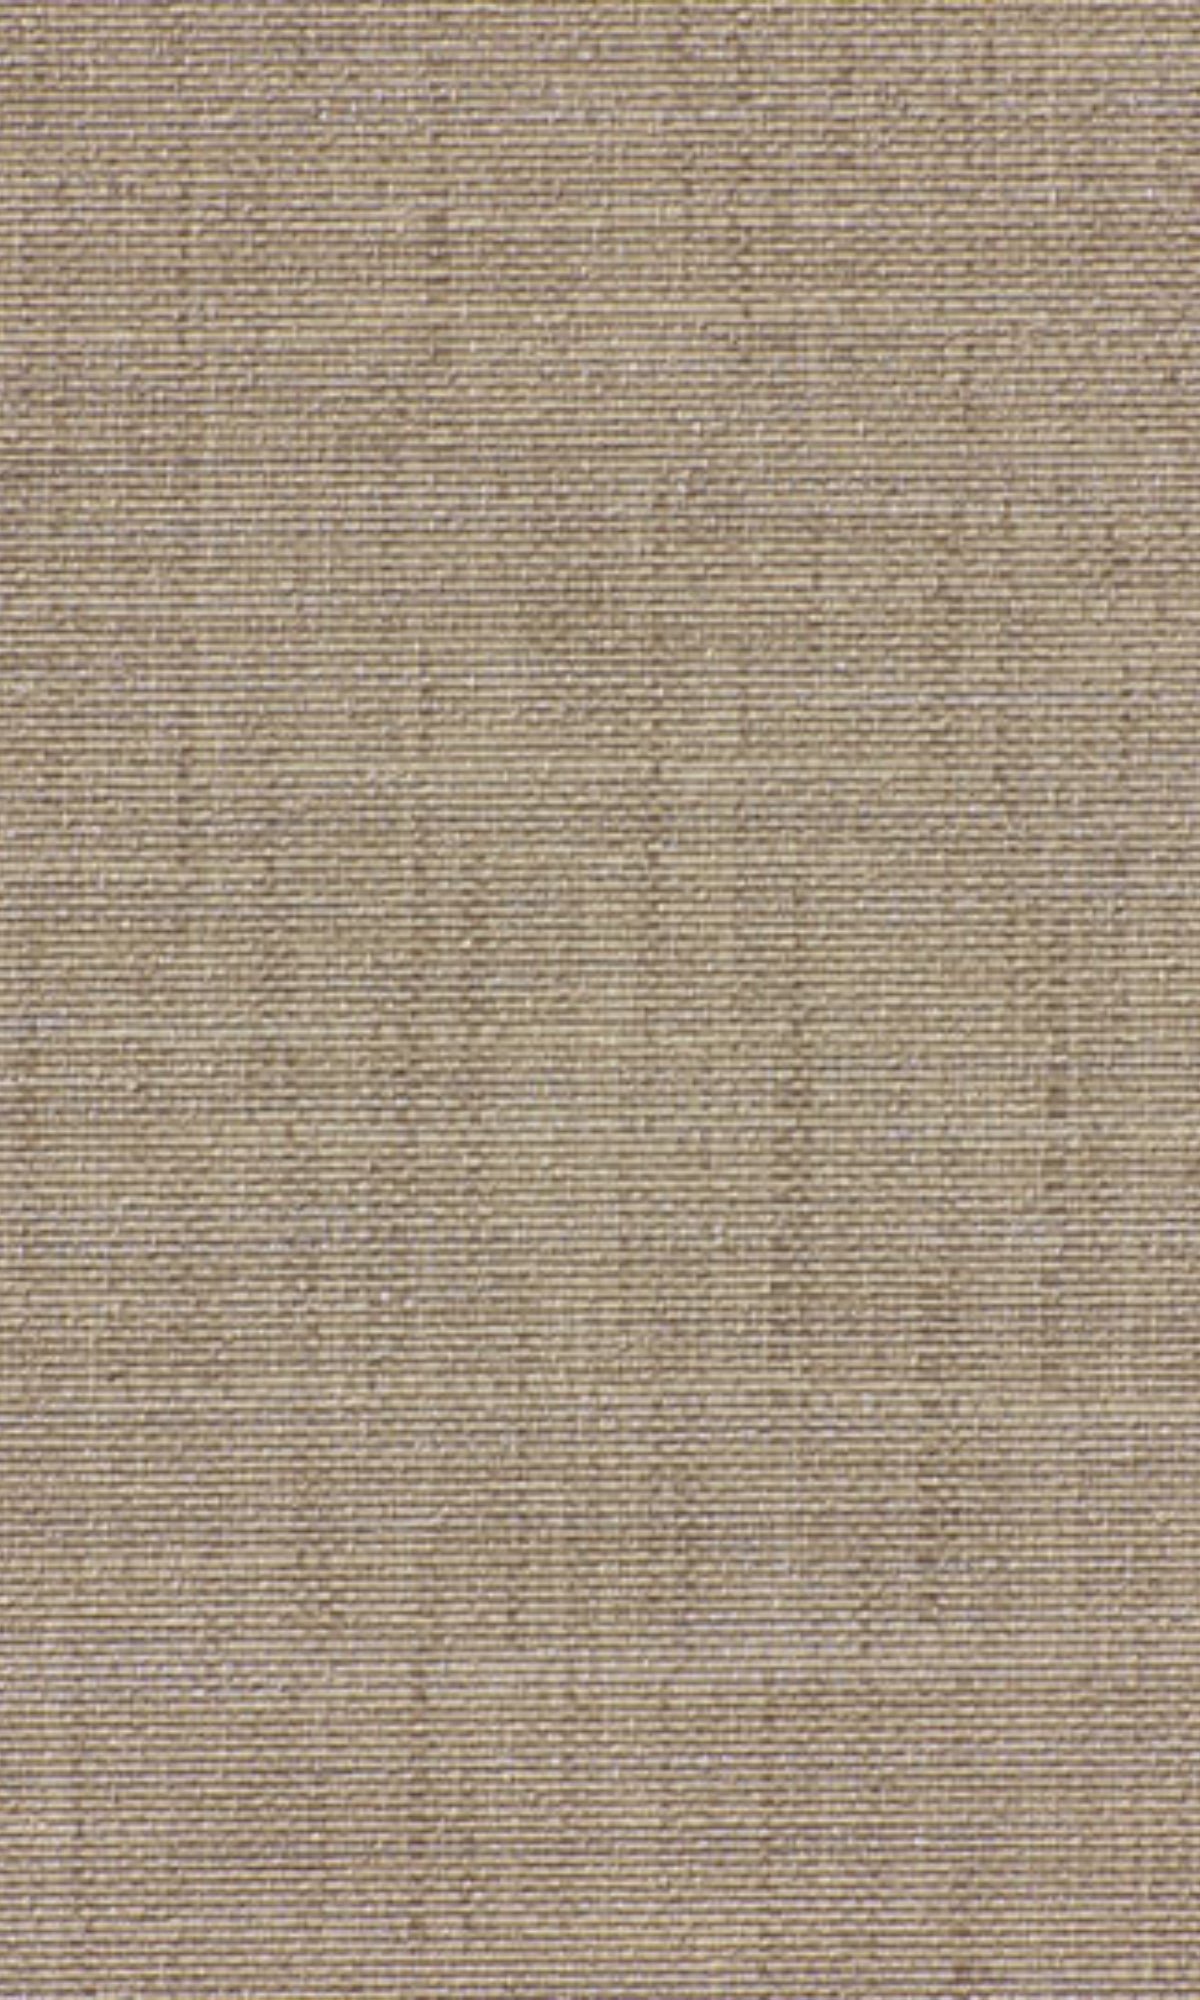 Brown Linen Like Commercial Wallpaper C7544